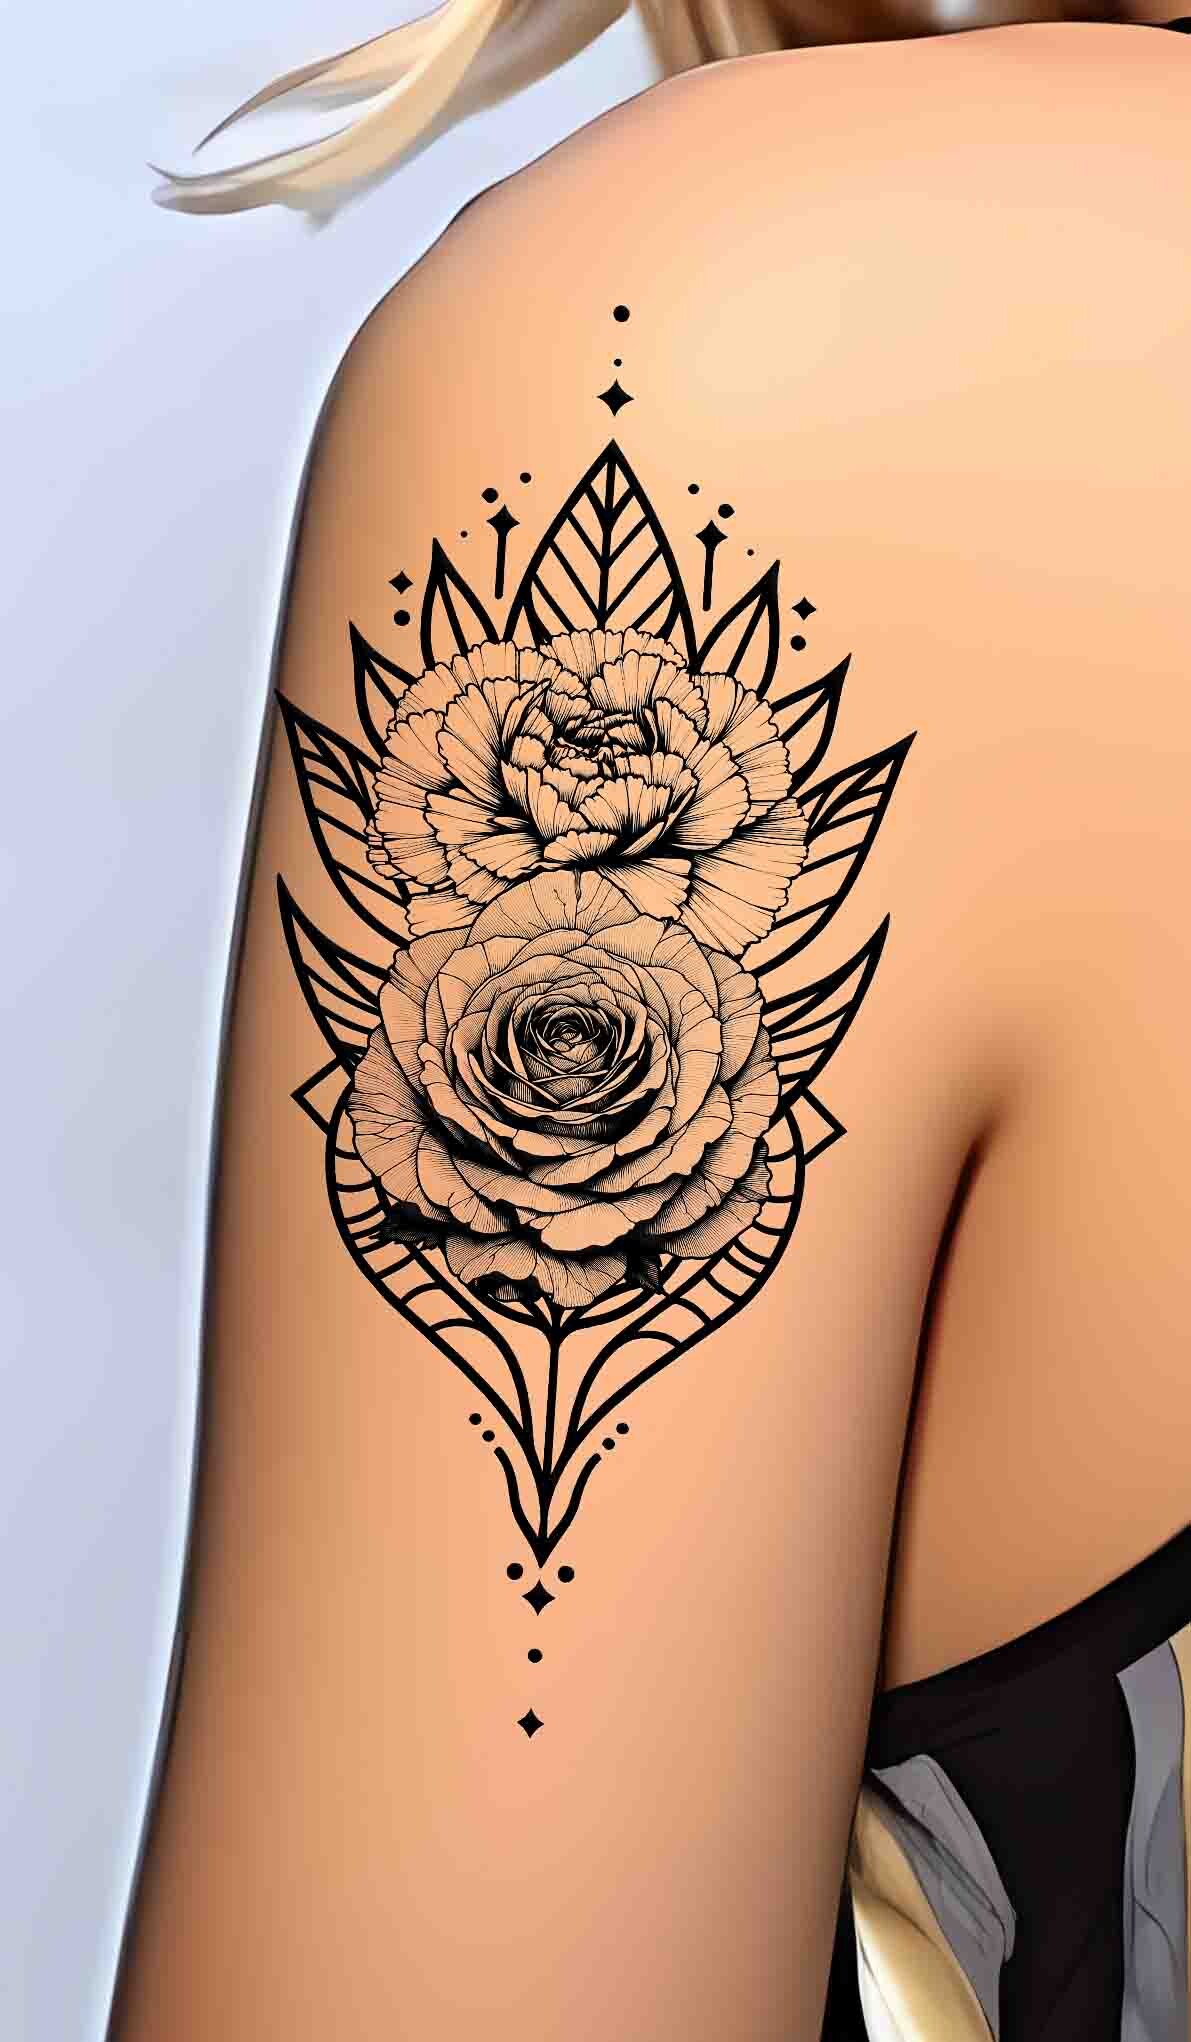 January Flower Tattoo